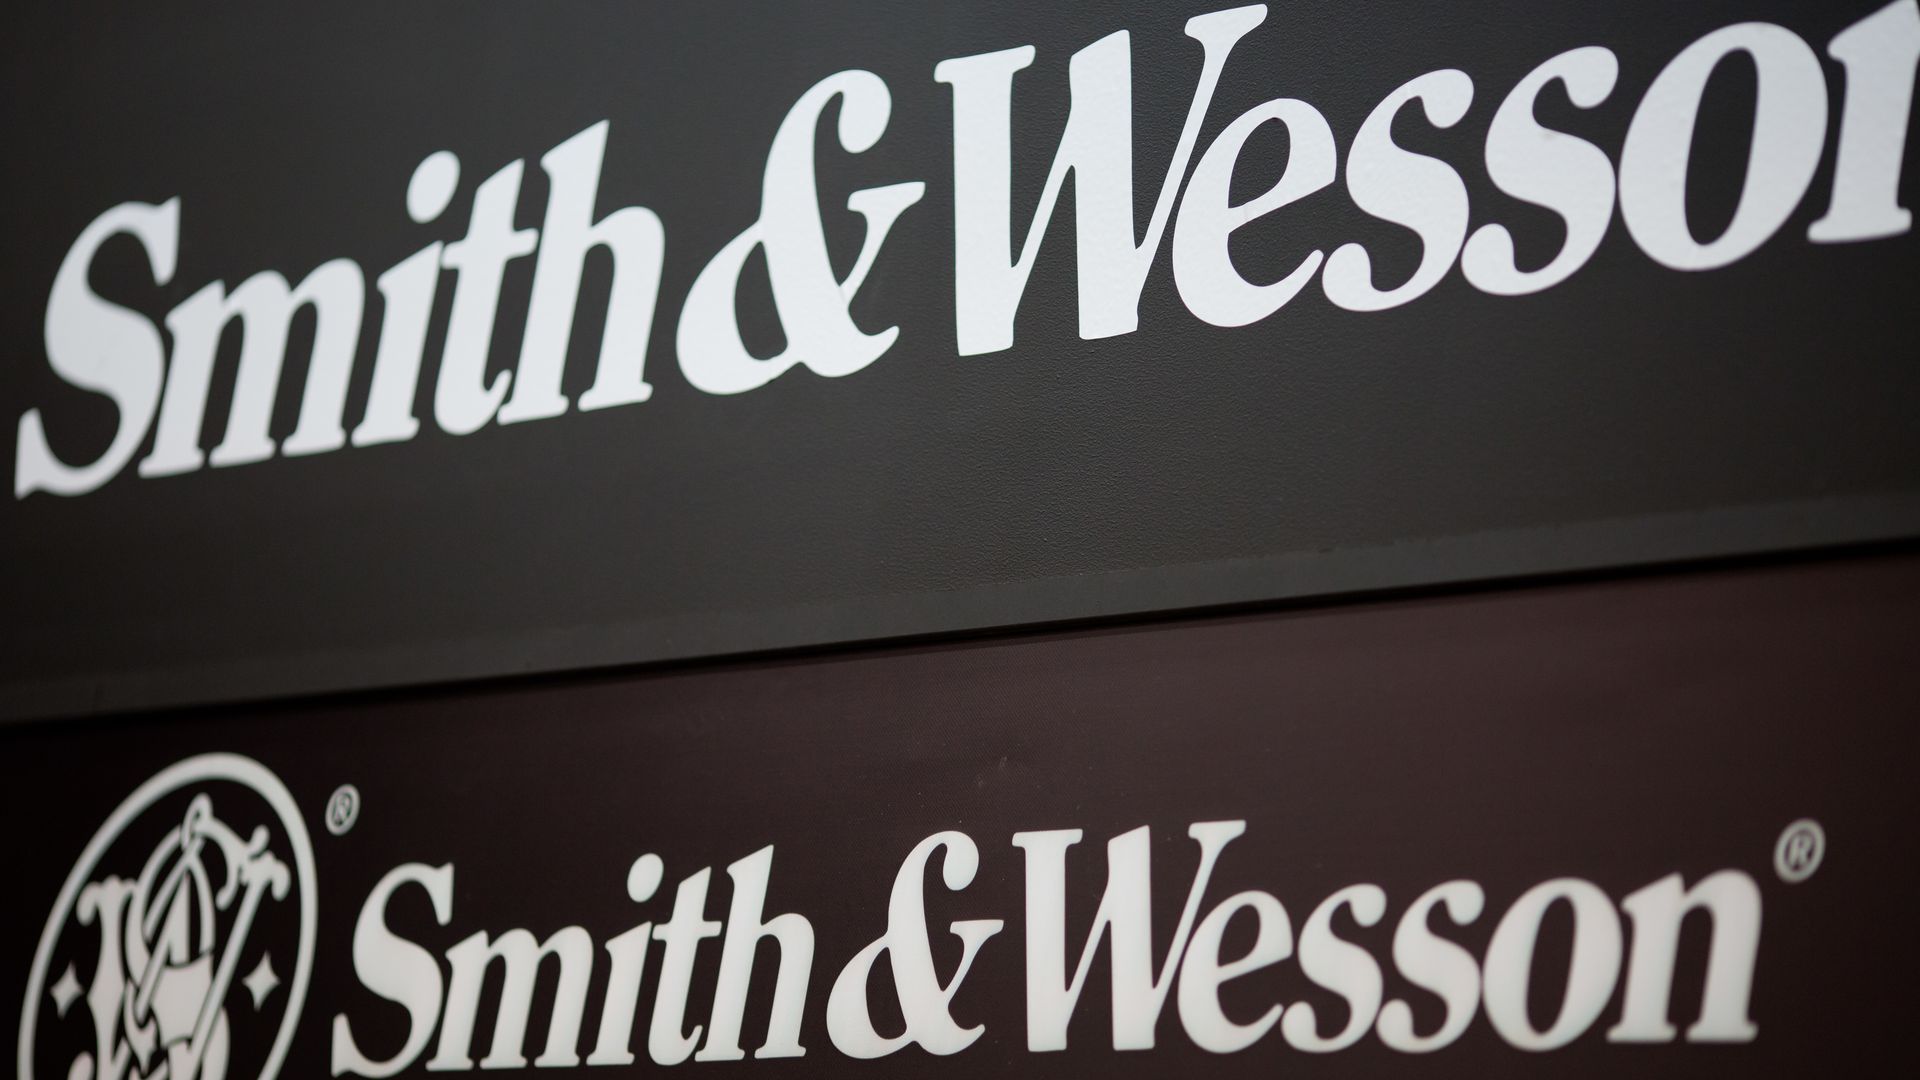 Smith & Wesson's logo